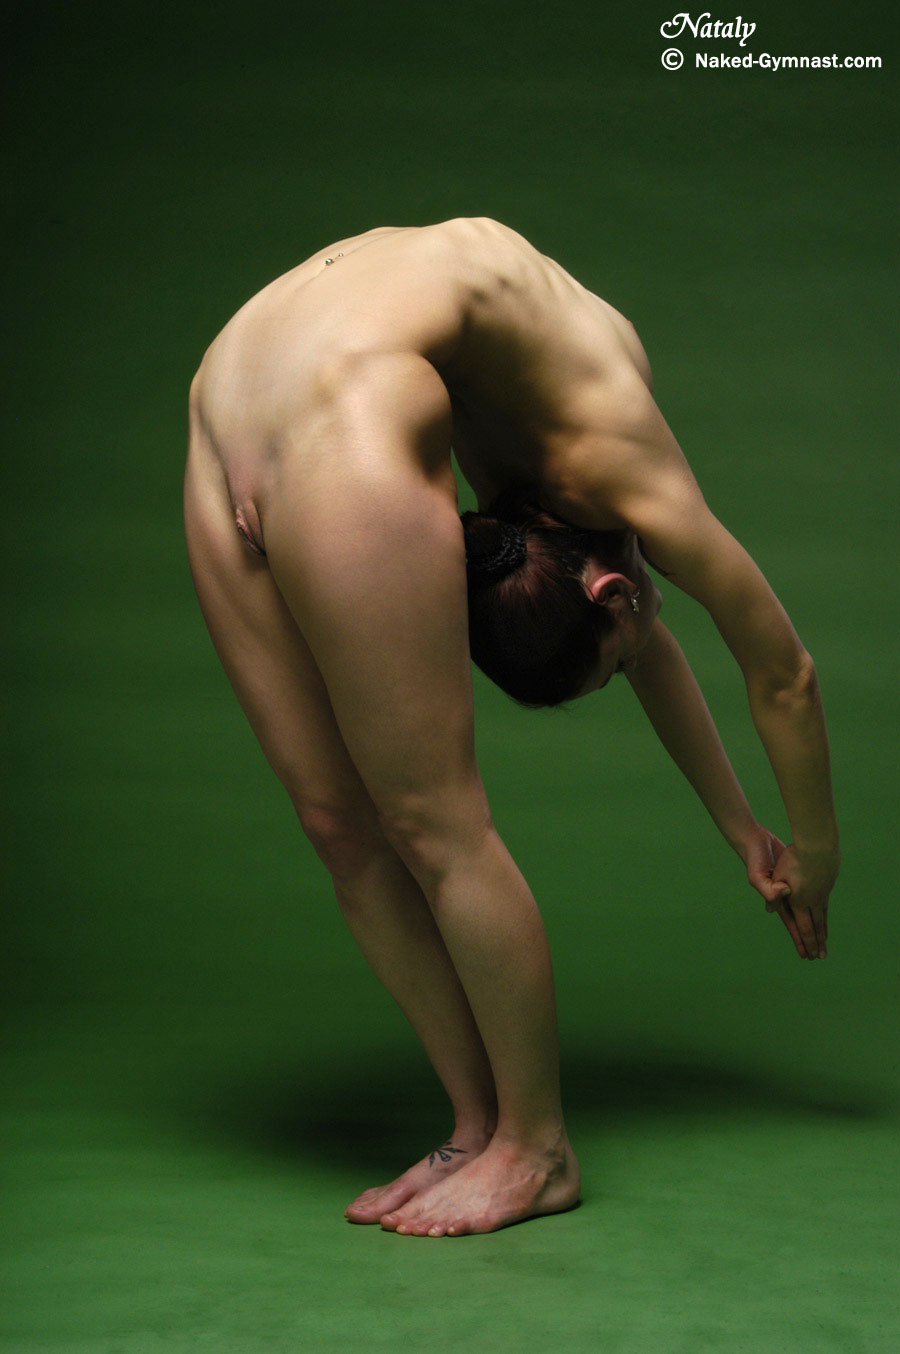 Women gymnastics naked doing